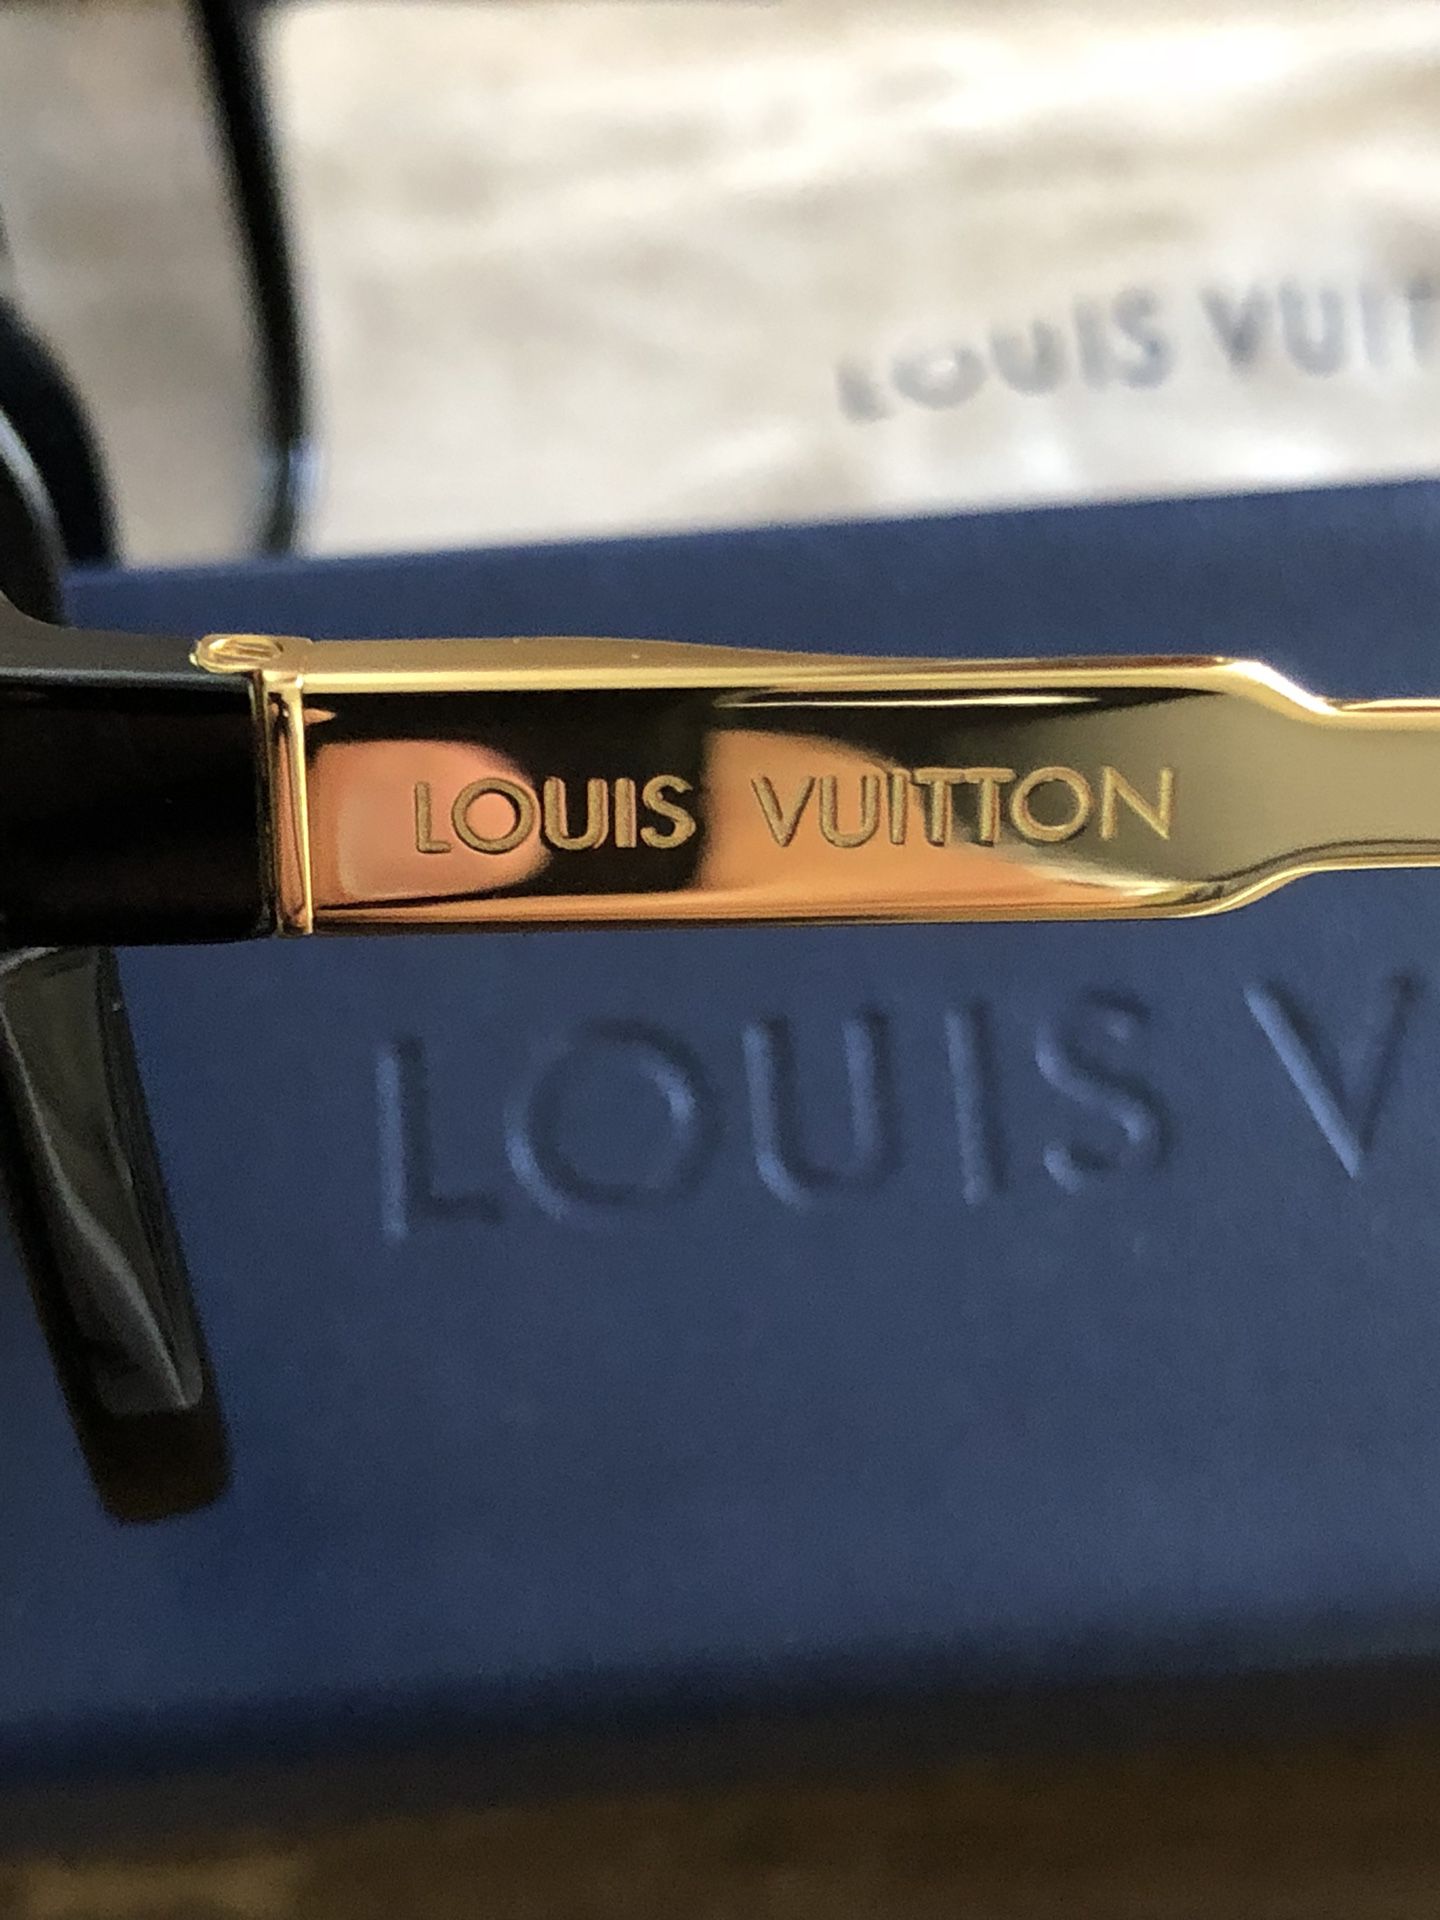 Buy Louis Vuitton Mascot Sunglasses Z0936E at